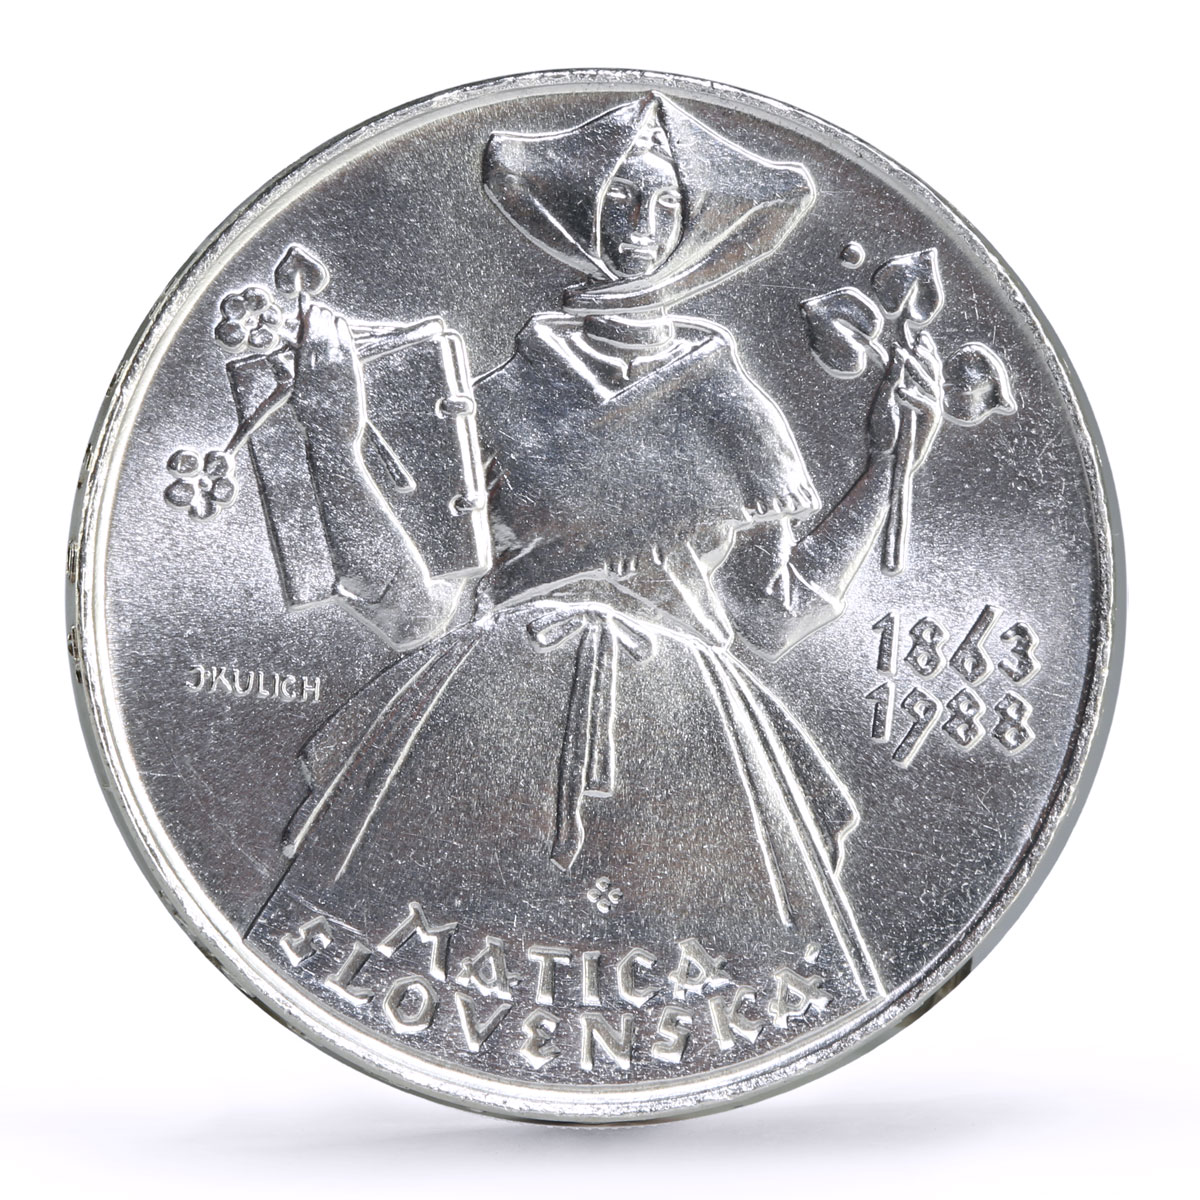 Czechoslovakia 500 korun Matica Slovenska Society Institute silver coin 1988